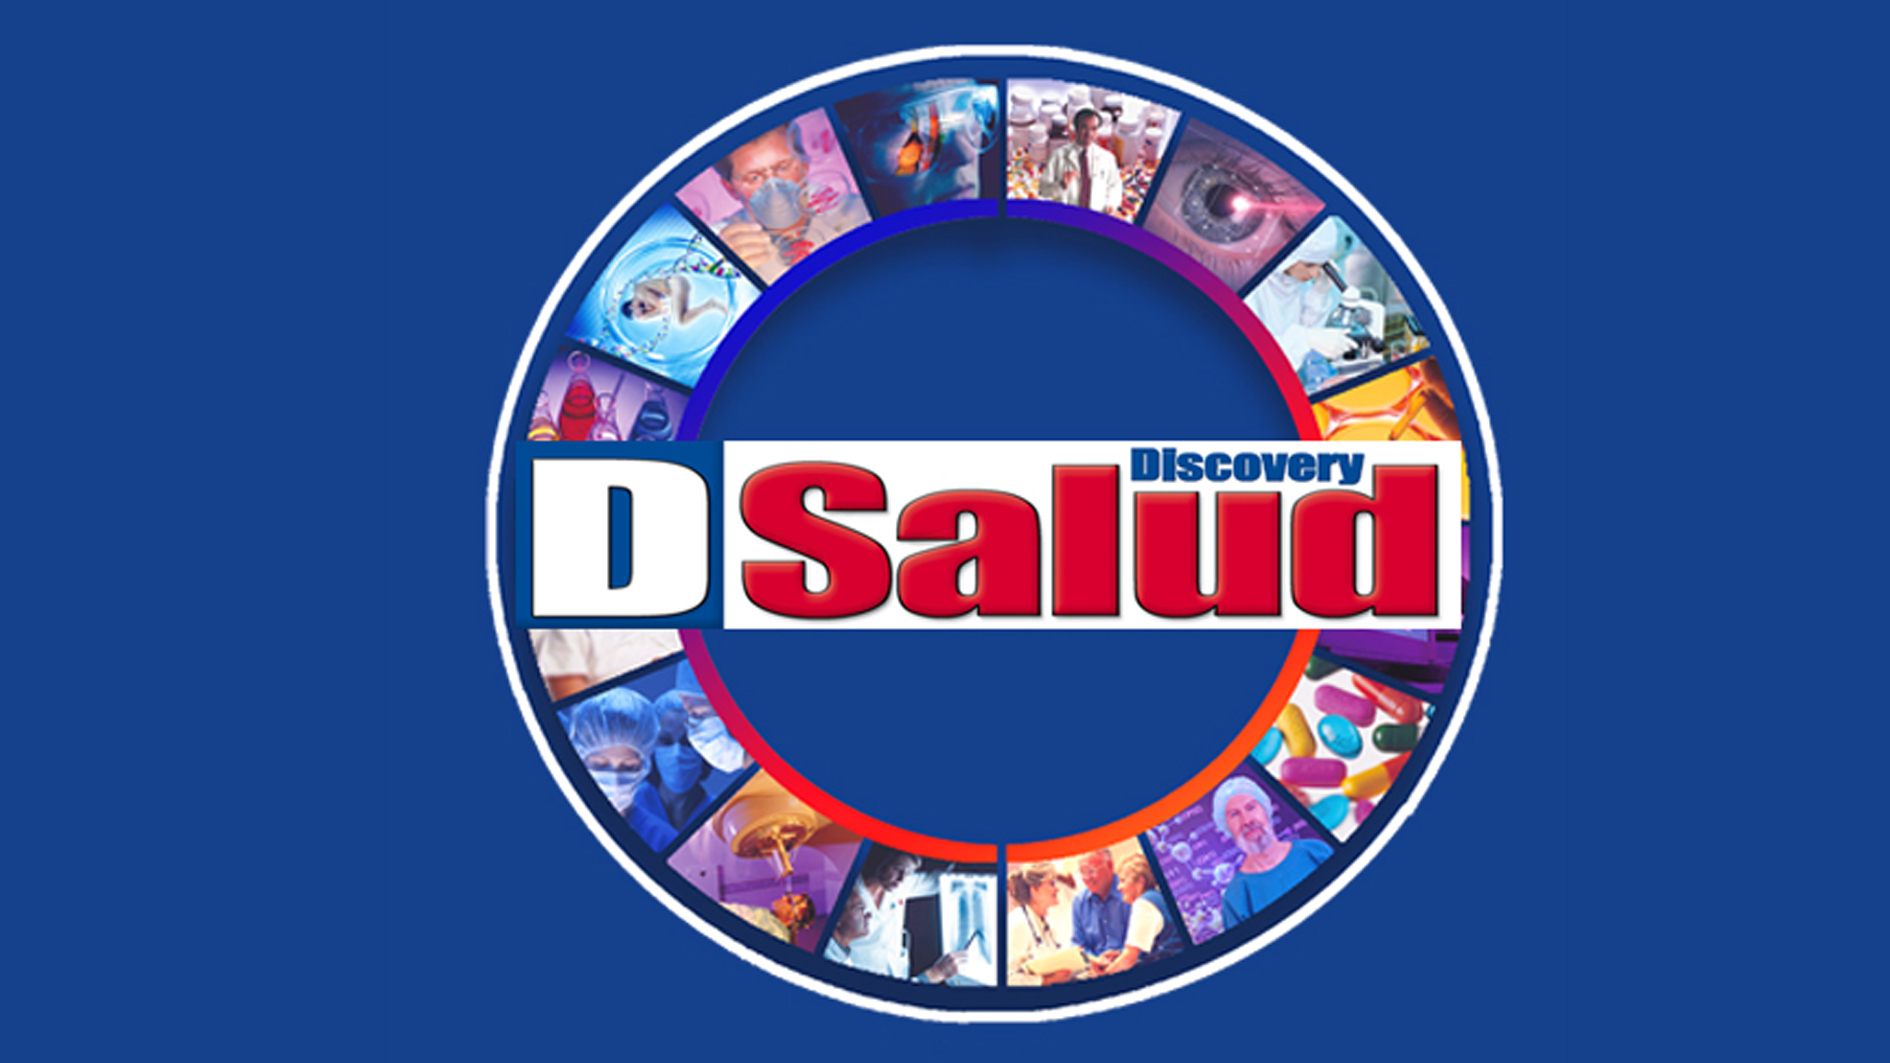 www.dsalud.com